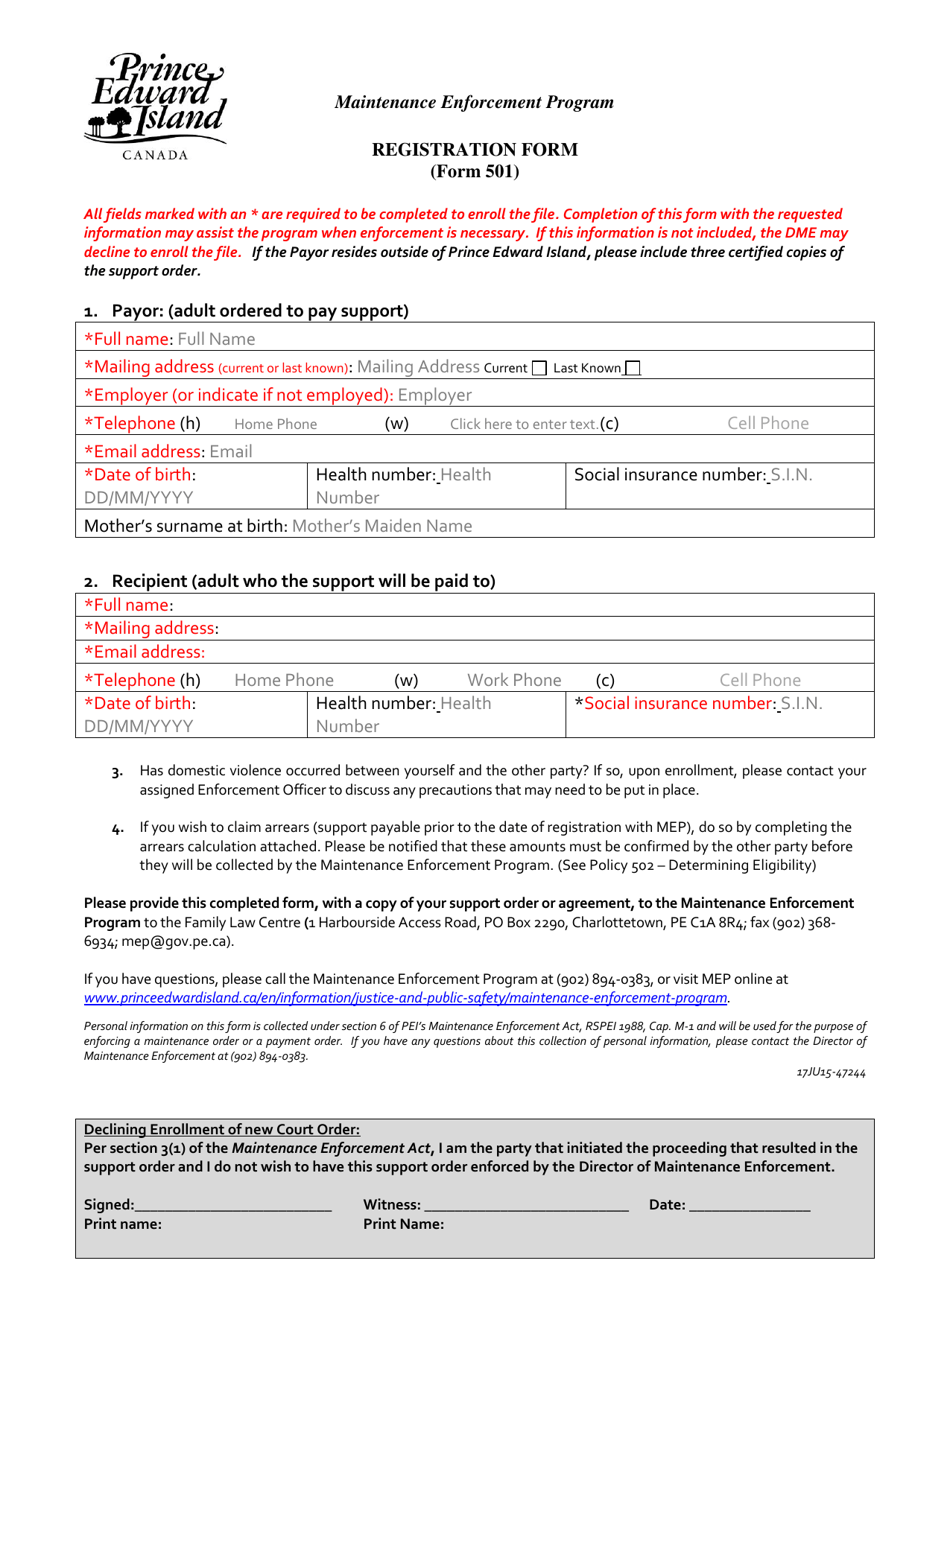 Form 501 Registration Form - Maintenance Enforcement Program - Prince Edward Island, Canada, Page 1